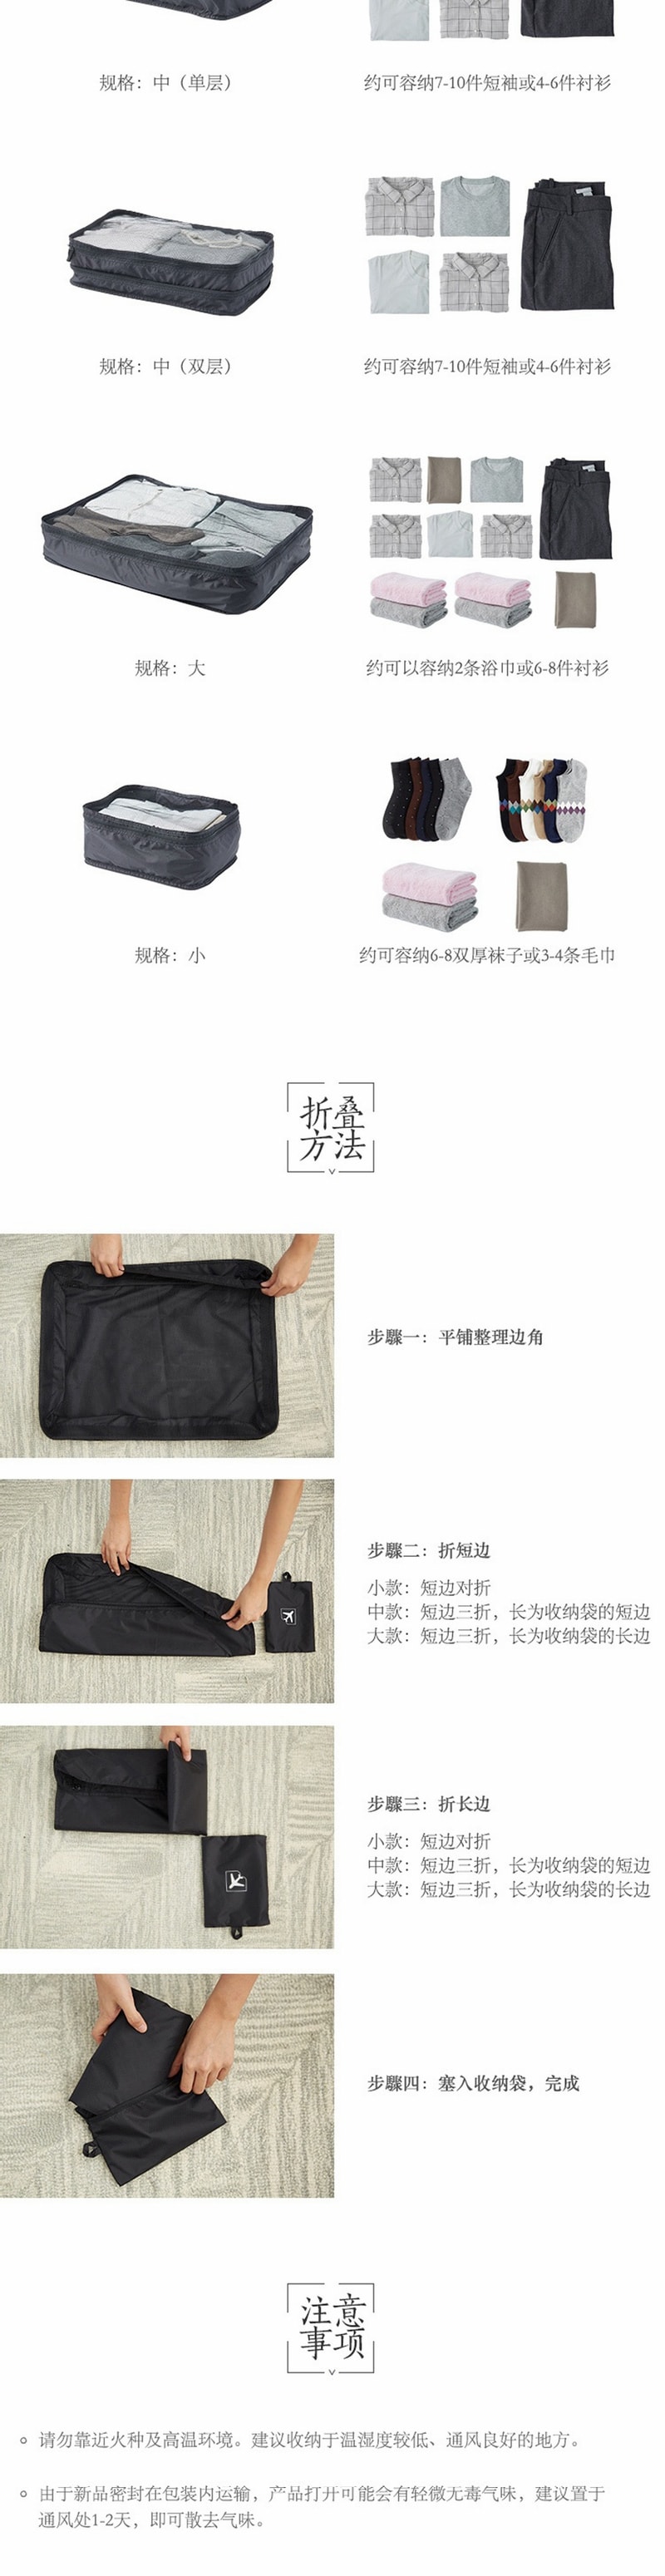 Lifease Foldable Travel Storage Bag